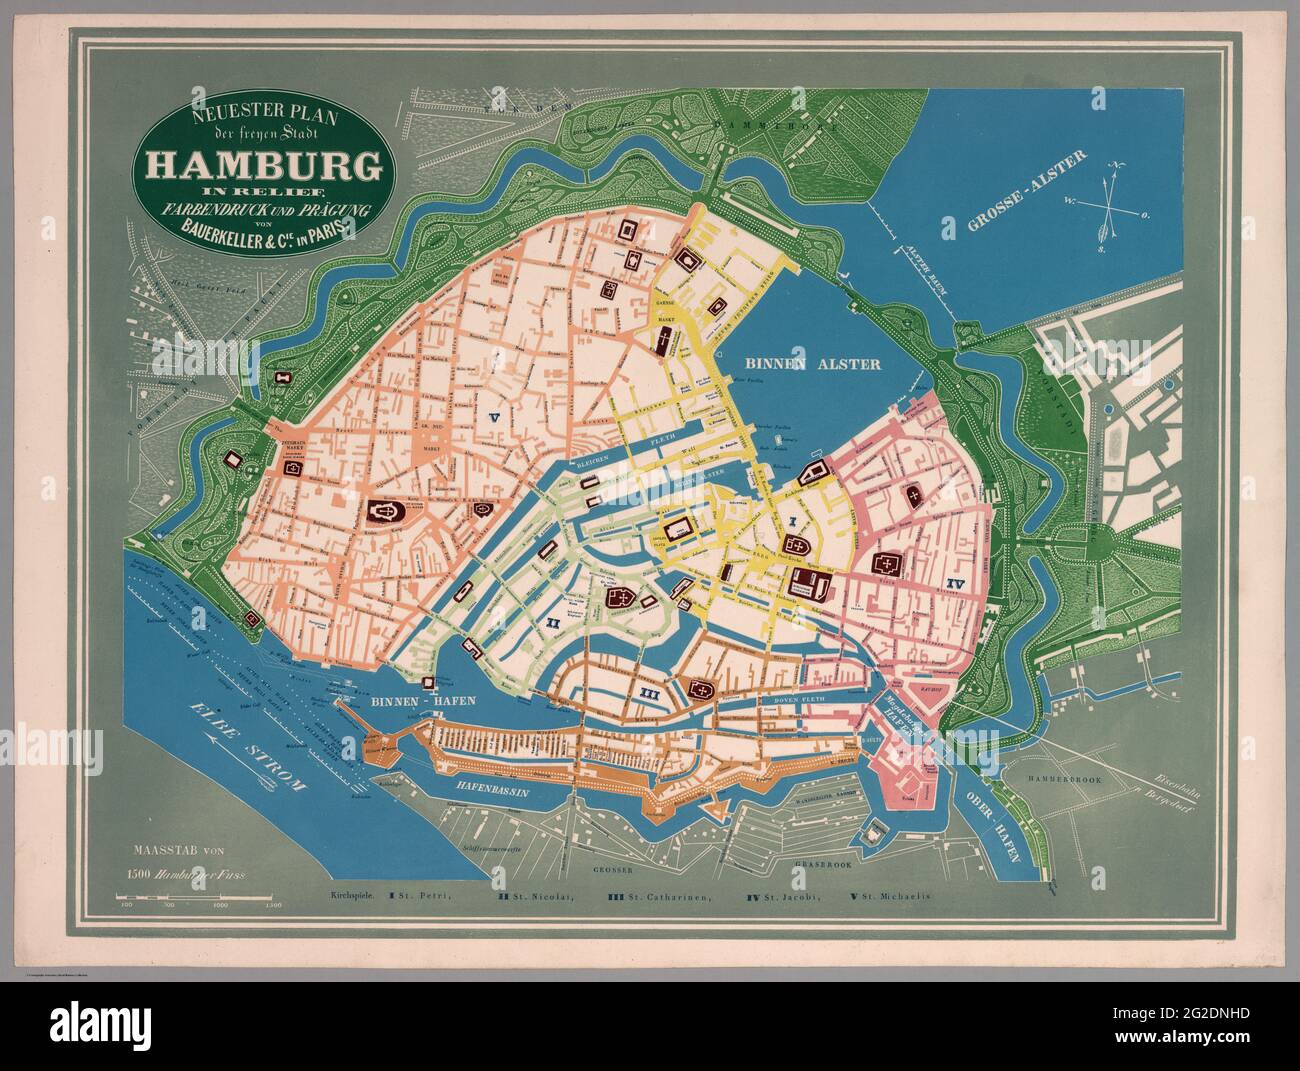 Hamburg Map, Hamburg Plan, Hamburg Maps, Map of Hamburg, Plan of Hamburg, Hamburg City, Retro Hamburg Map, Vintage Hamburg Map, Old Hamburg Map, 1845 Stock Photo